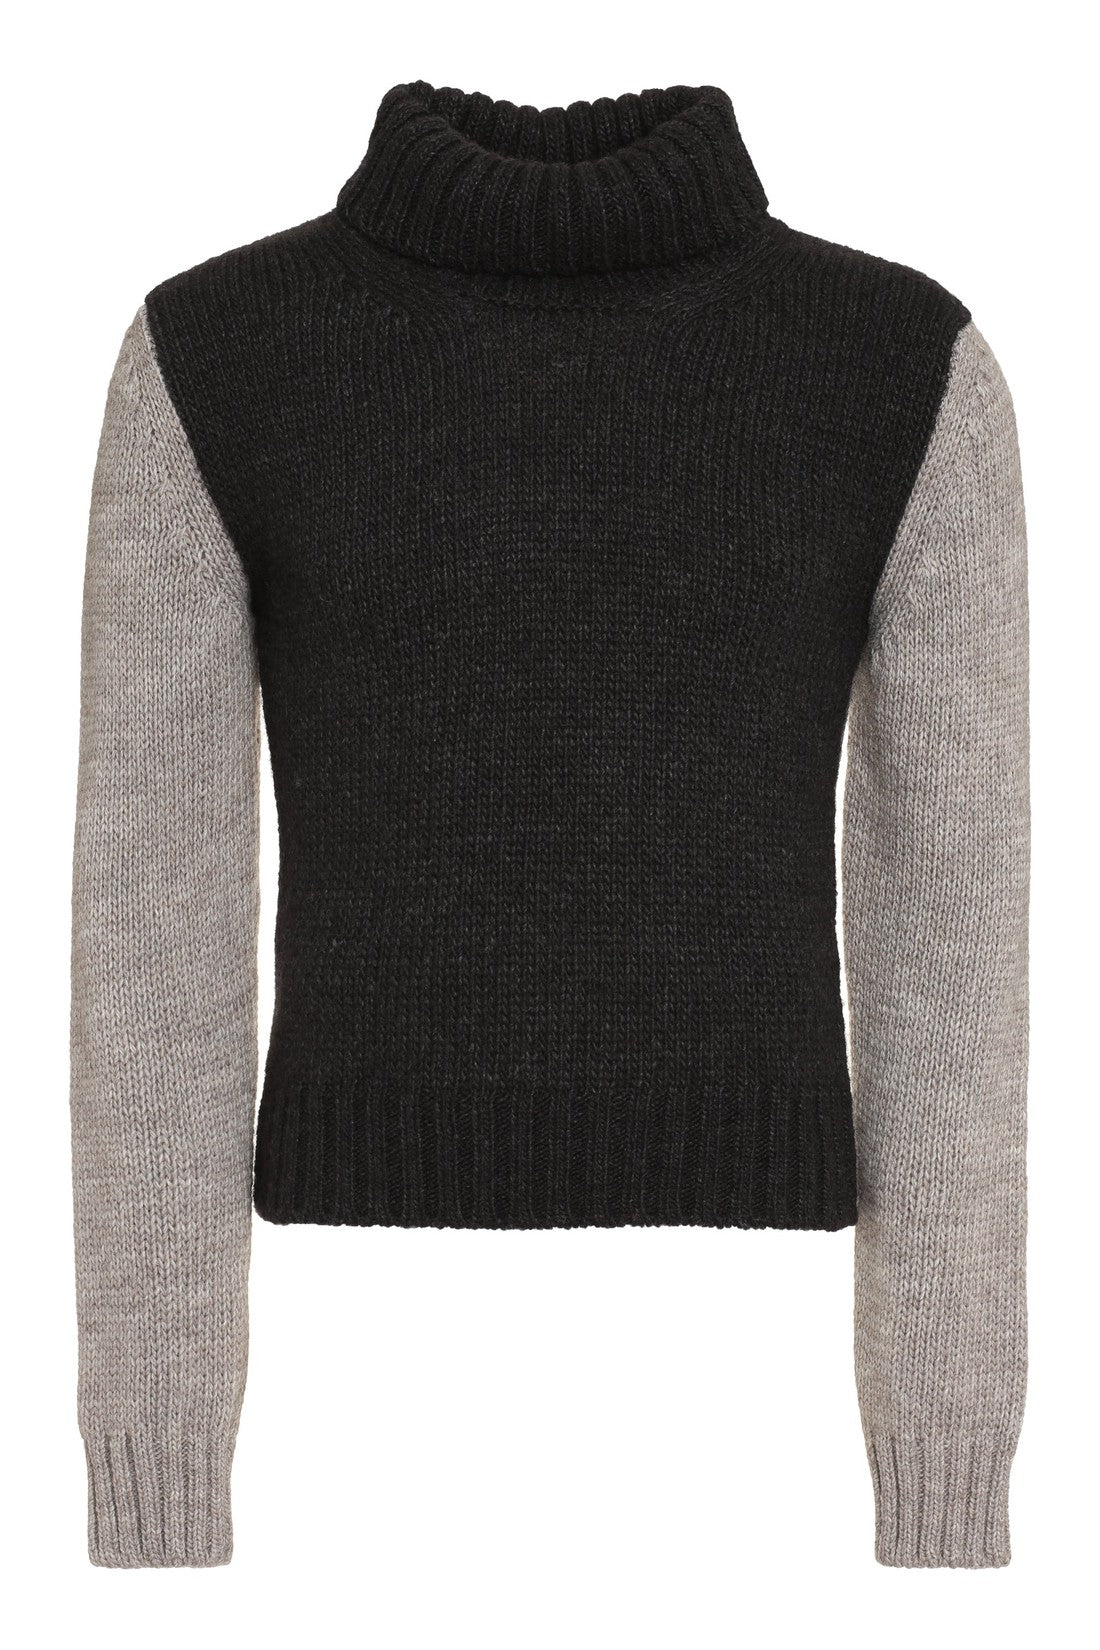 Dolce & Gabbana-OUTLET-SALE-Wool turtleneck sweater-ARCHIVIST